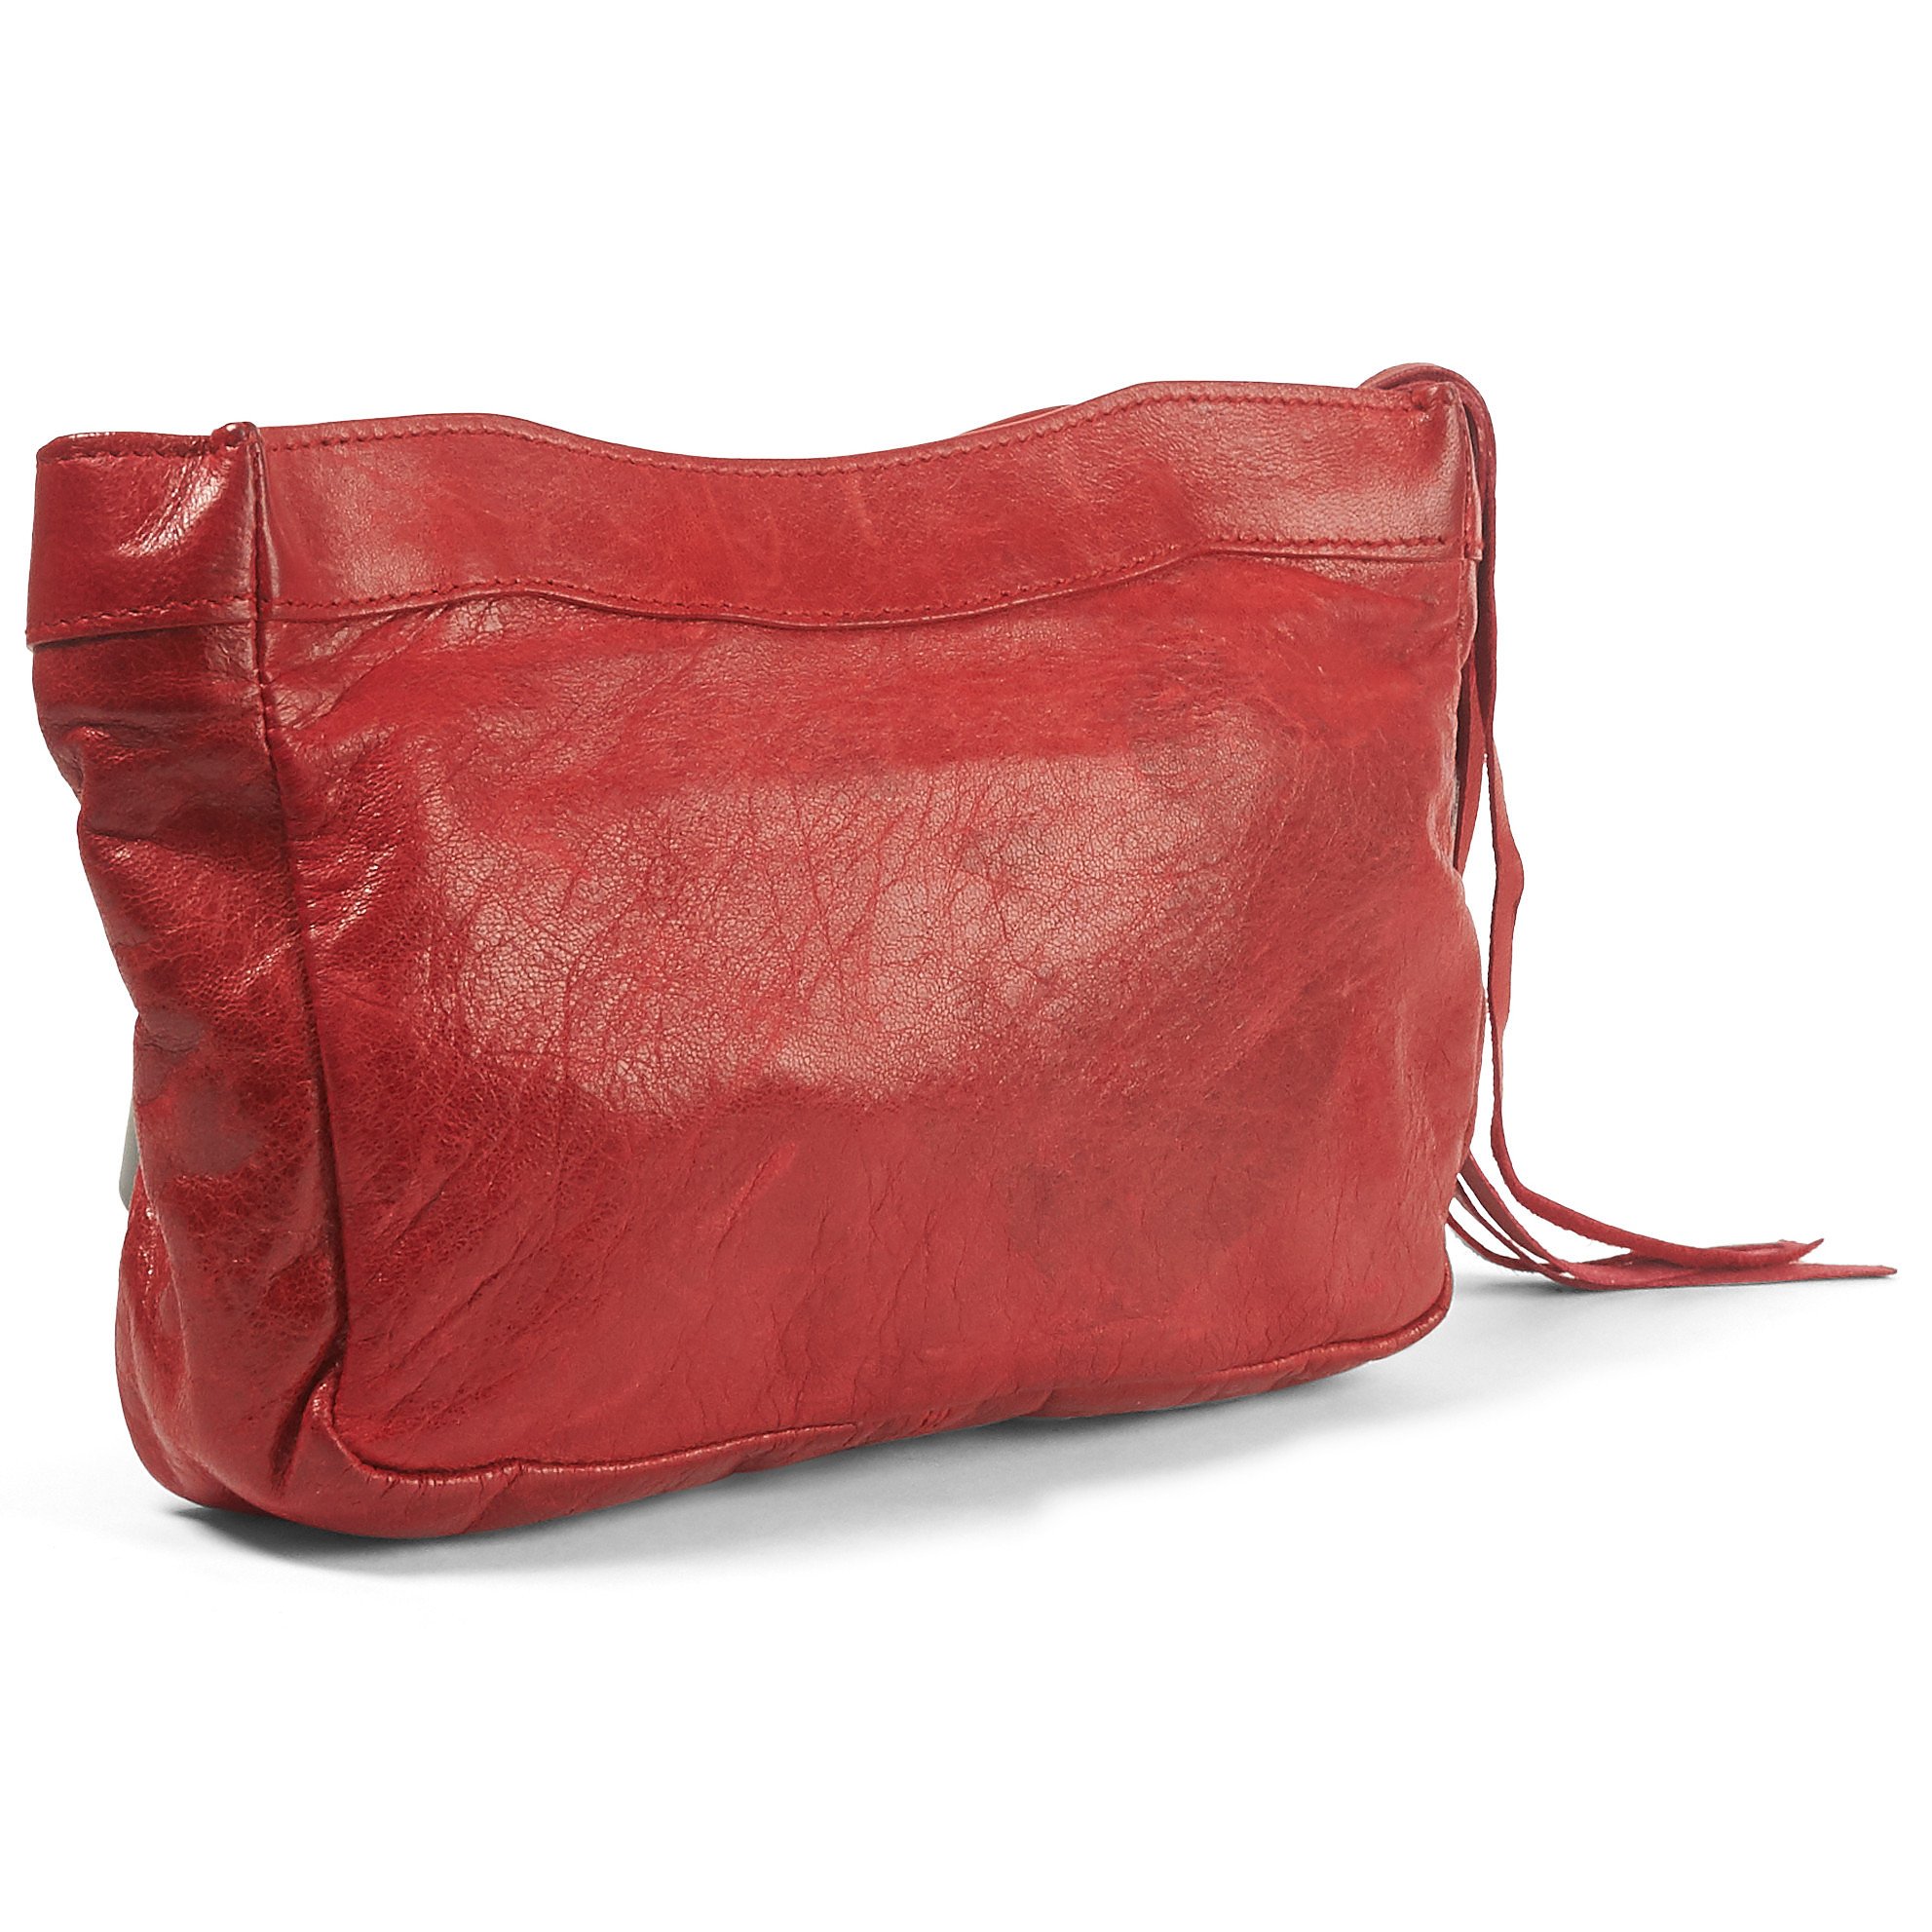 Balenciaga Leather Clutch Bag